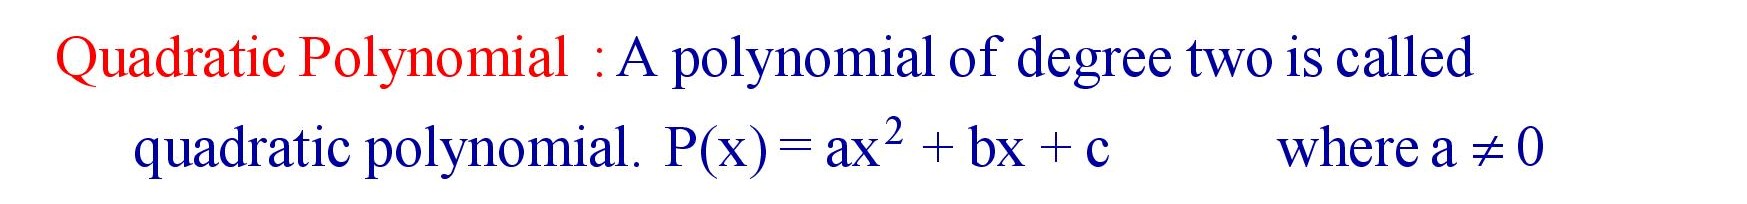 Quadratic Polynomial Definition